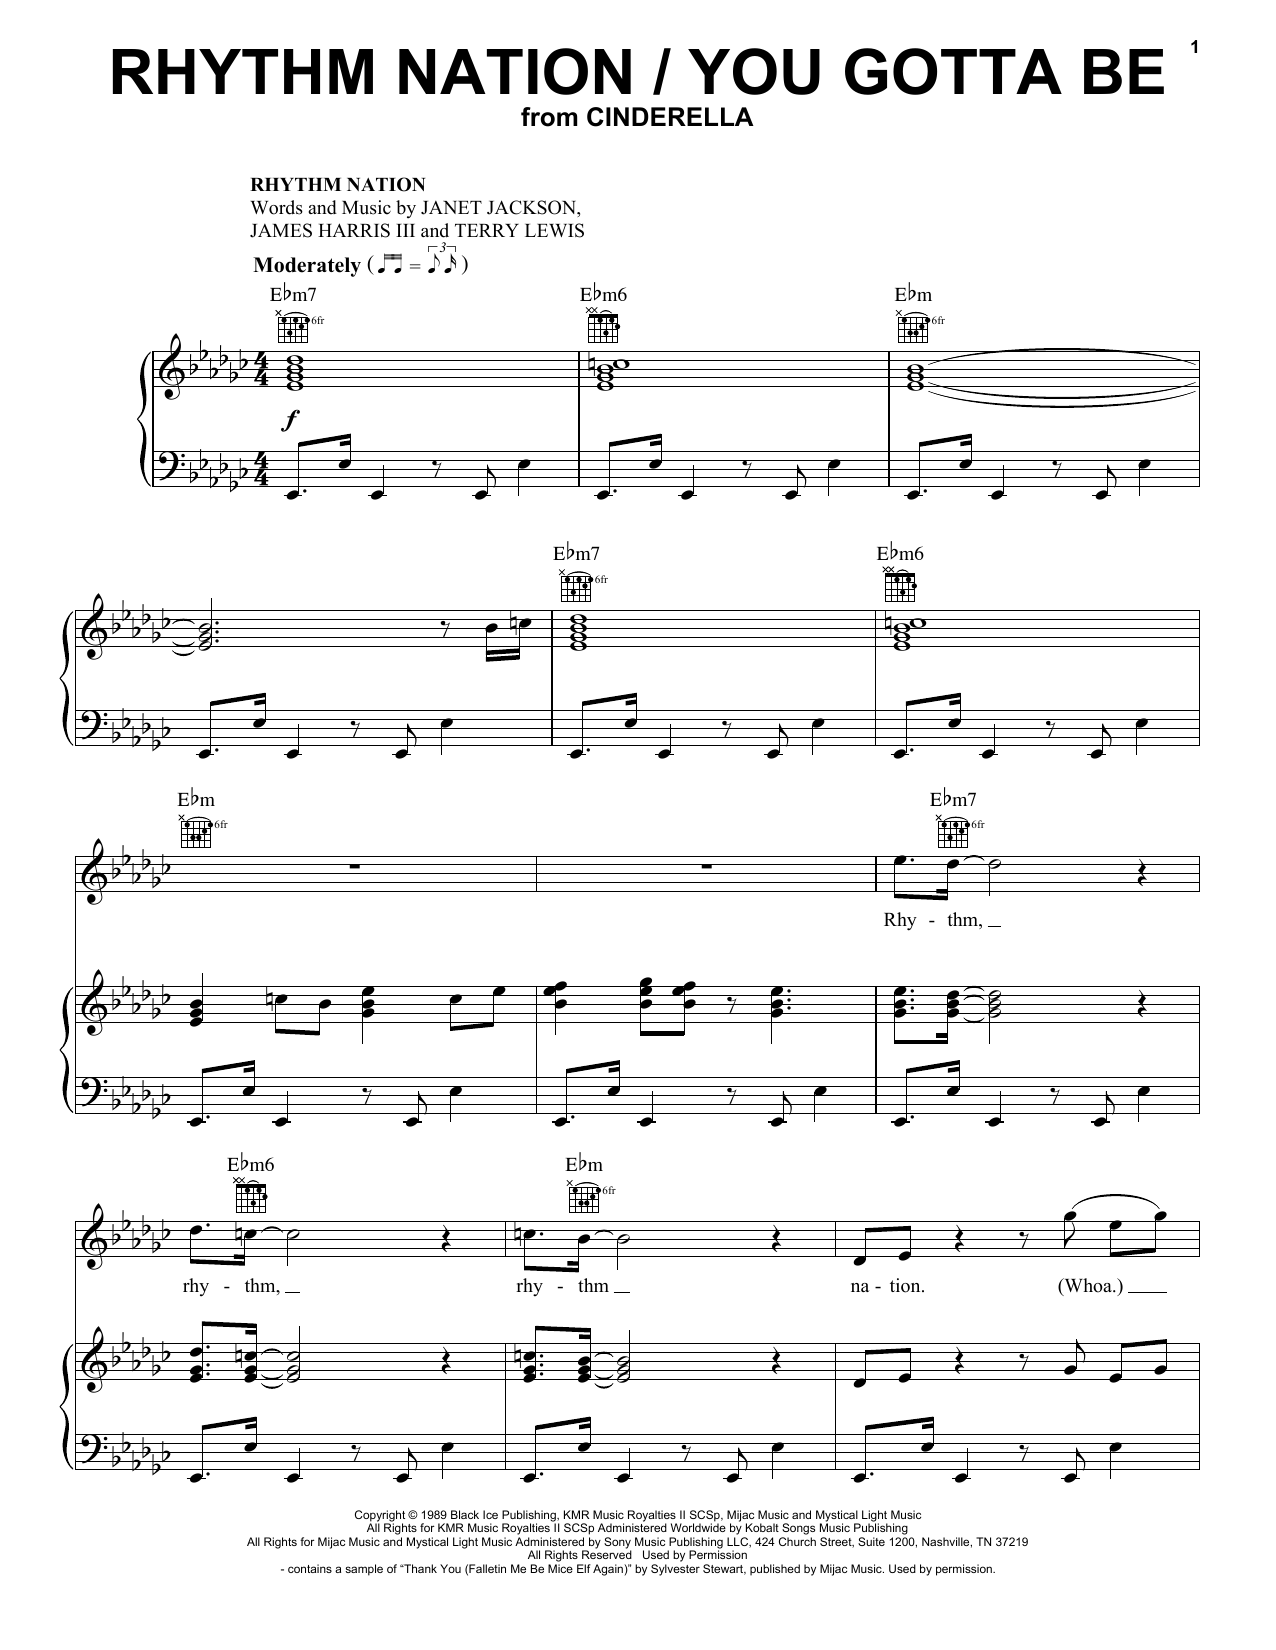 Rhythm Nation / You Gotta Be (from the Amazon Original Movie Cinderella) (Piano, Vocal & Guitar Chords (Right-Hand Melody)) von Camila Cabello and Idina Menzel